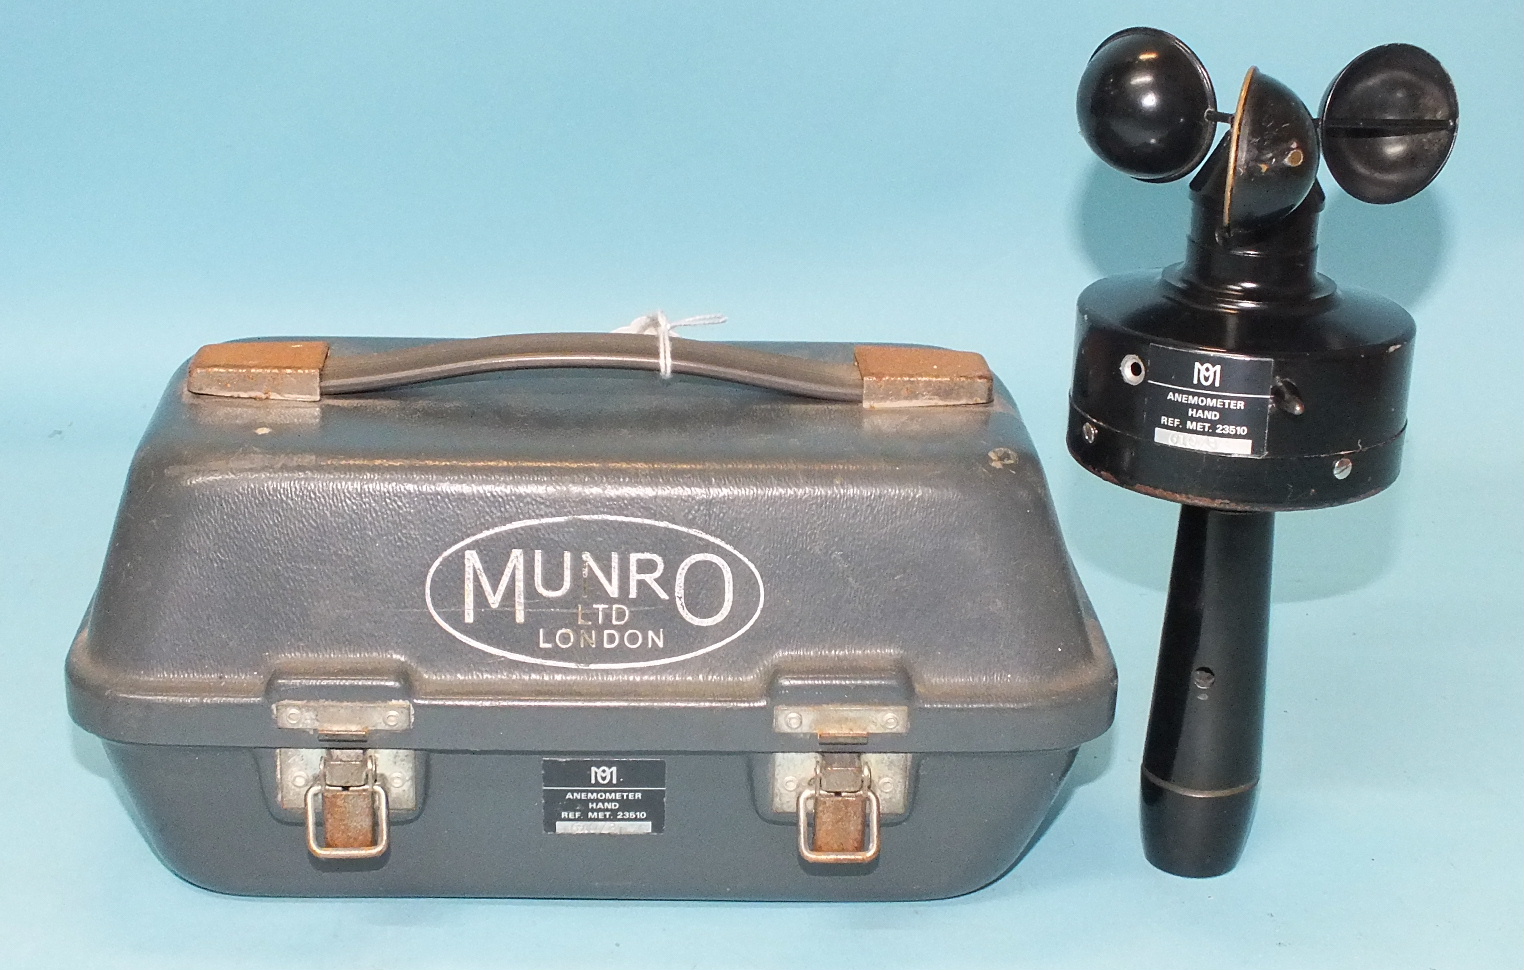 A Munro Ltd, London, anemometer, cased.